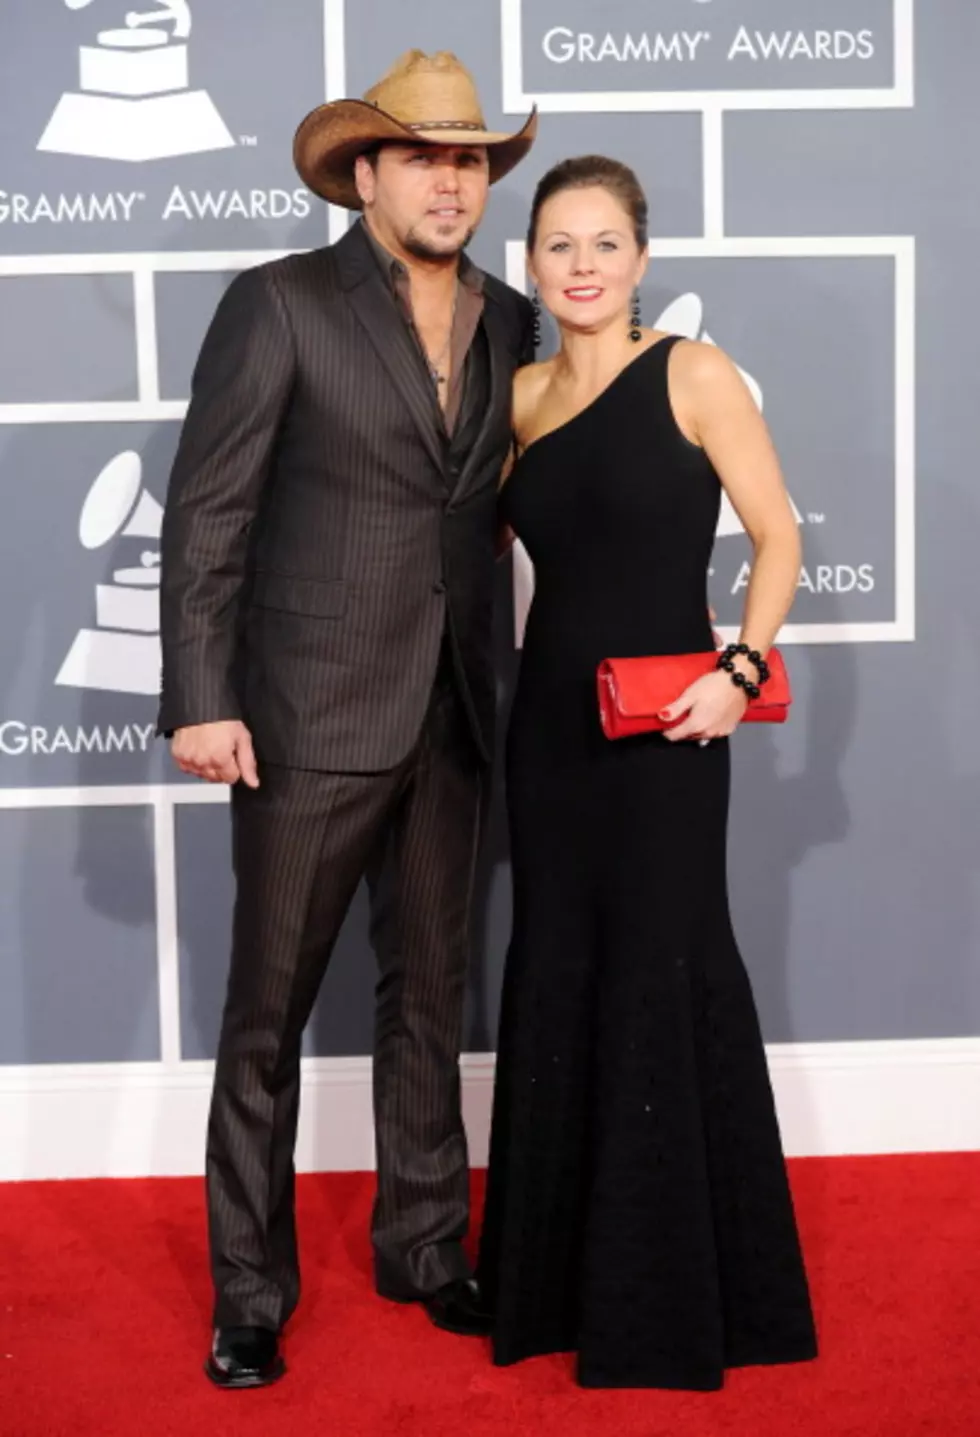 Jason Aldean and Wife Split